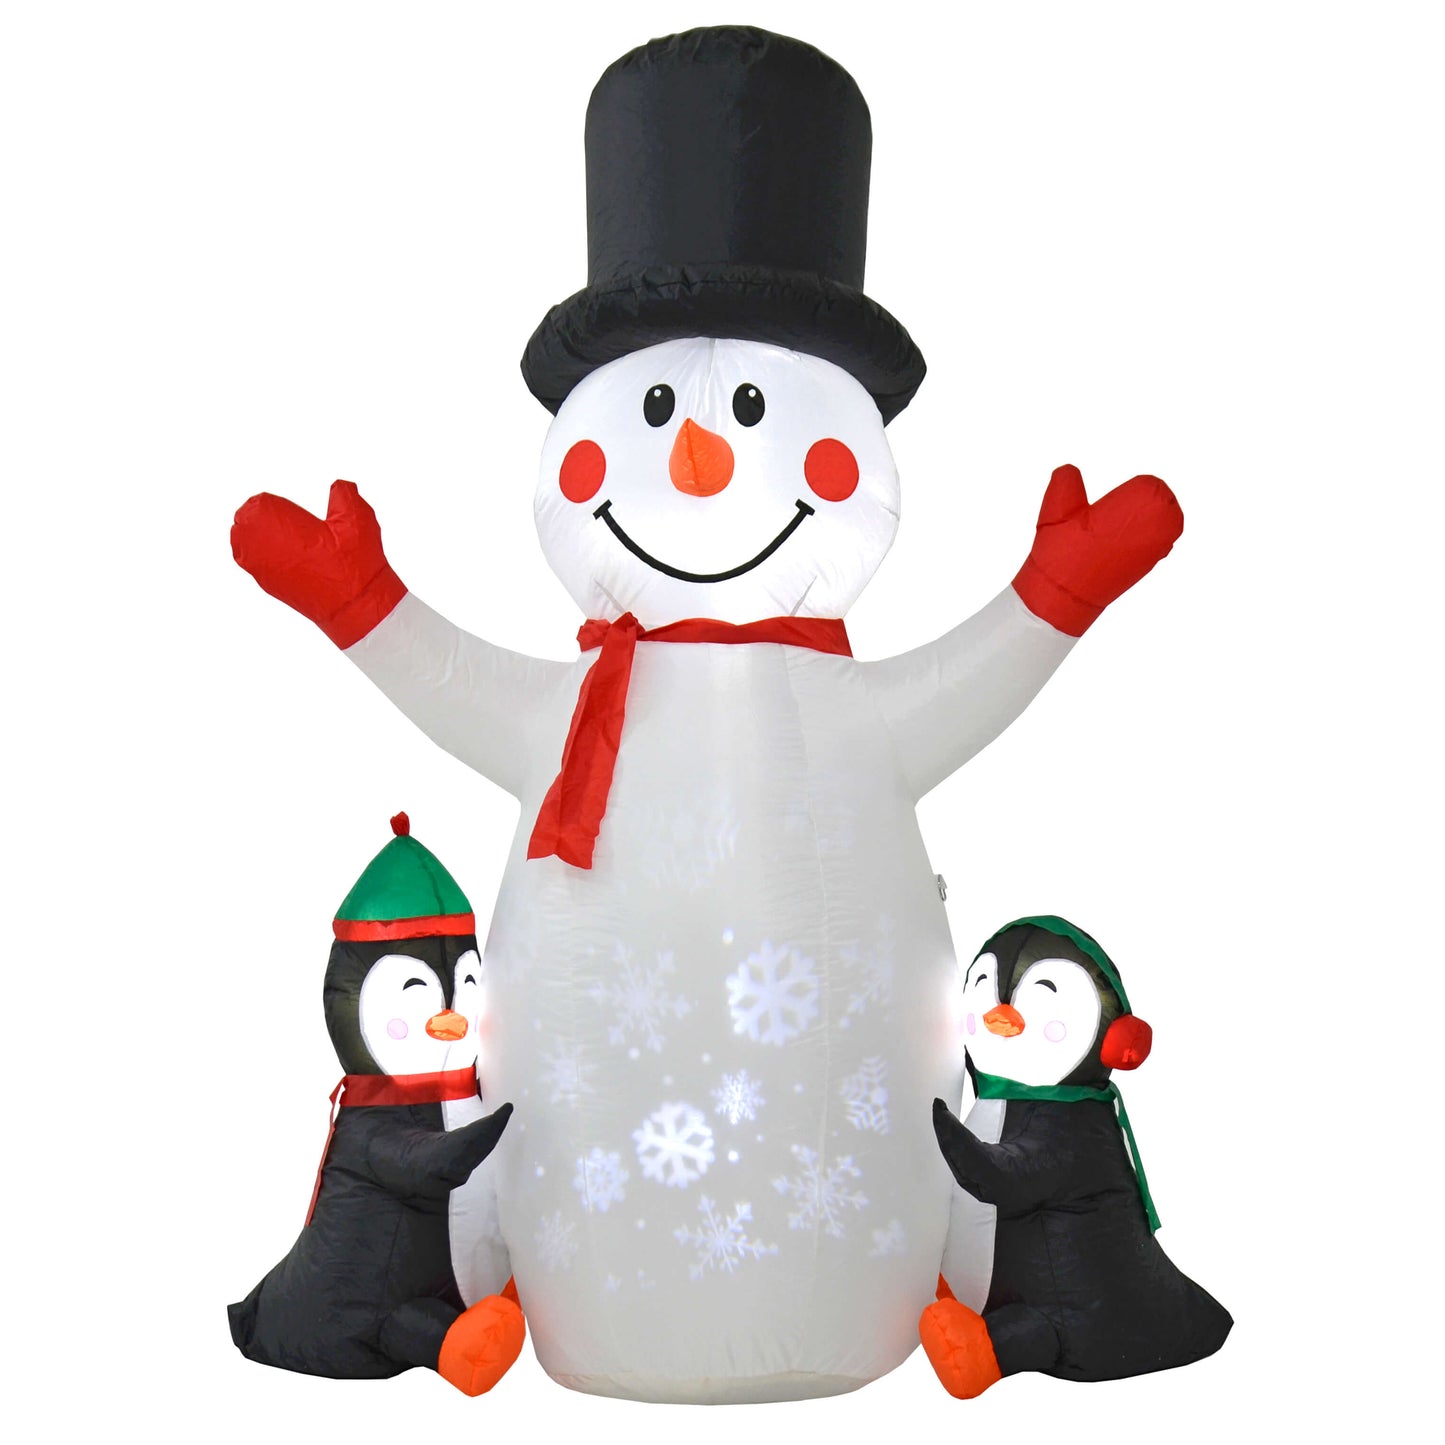 Mr Crimbo 6ft Light Up Inflatable Snowman Penguins Snowflakes - MrCrimbo.co.uk -XS7216 - -garden inflatable